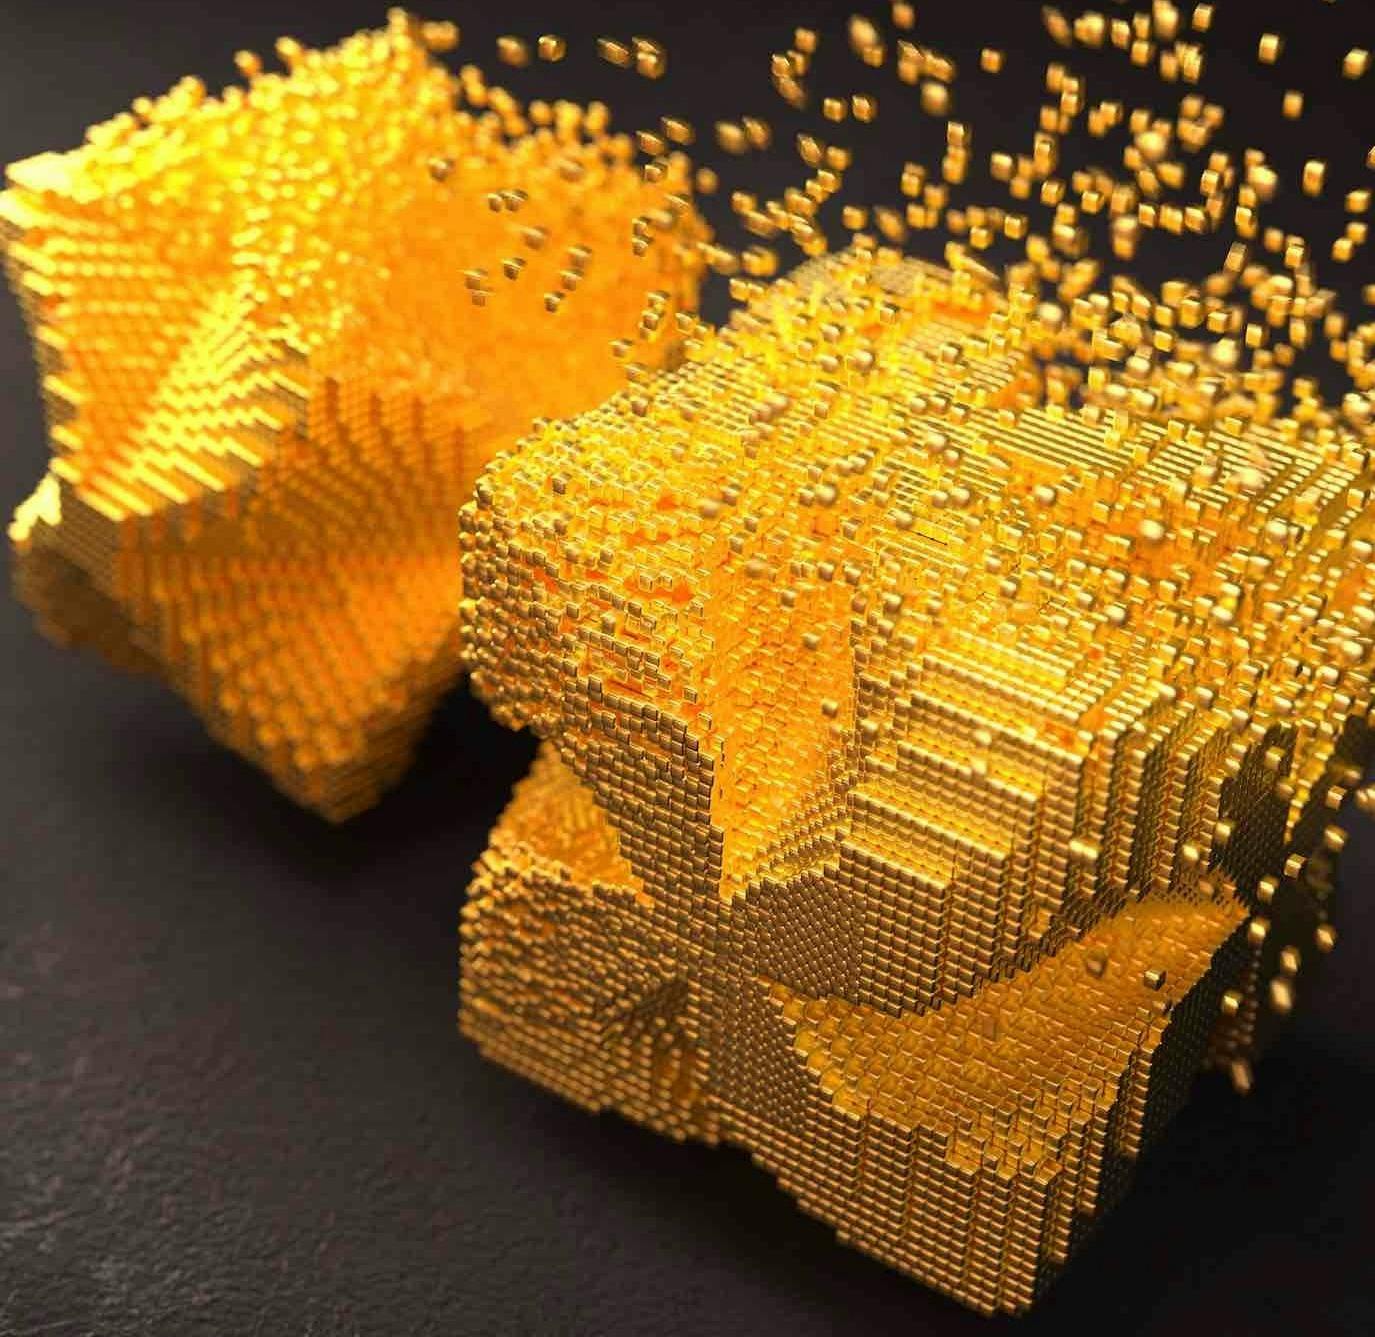 Investigating Chiral Morphogenesis of Gold Using Generative Cellular Automata